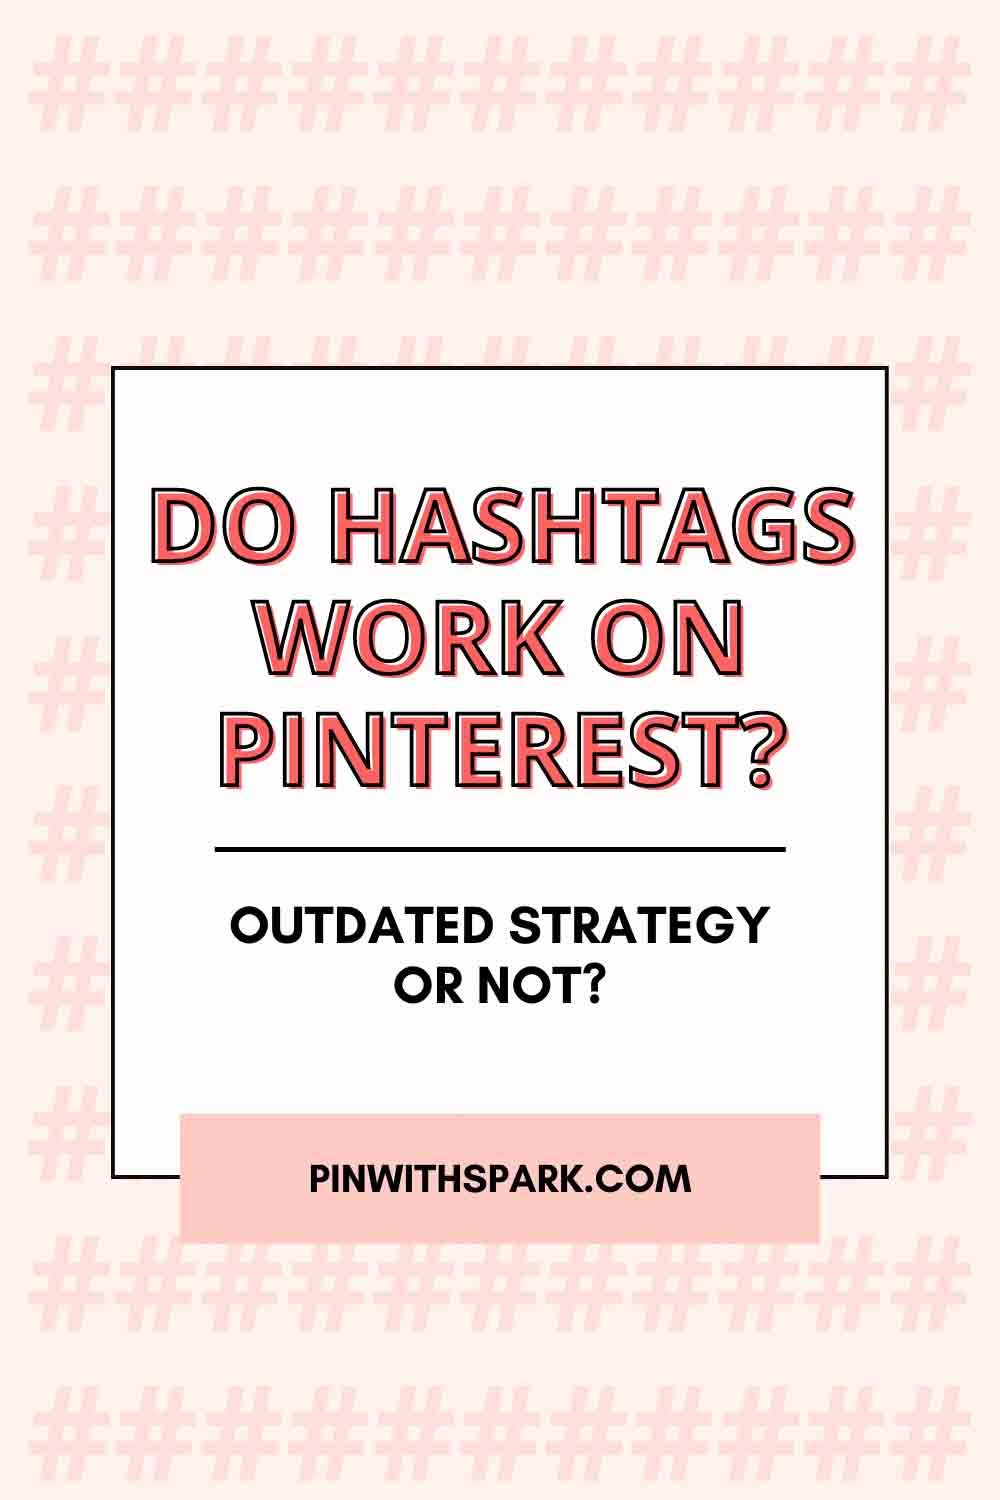 Do hashtags work on Pinterest?